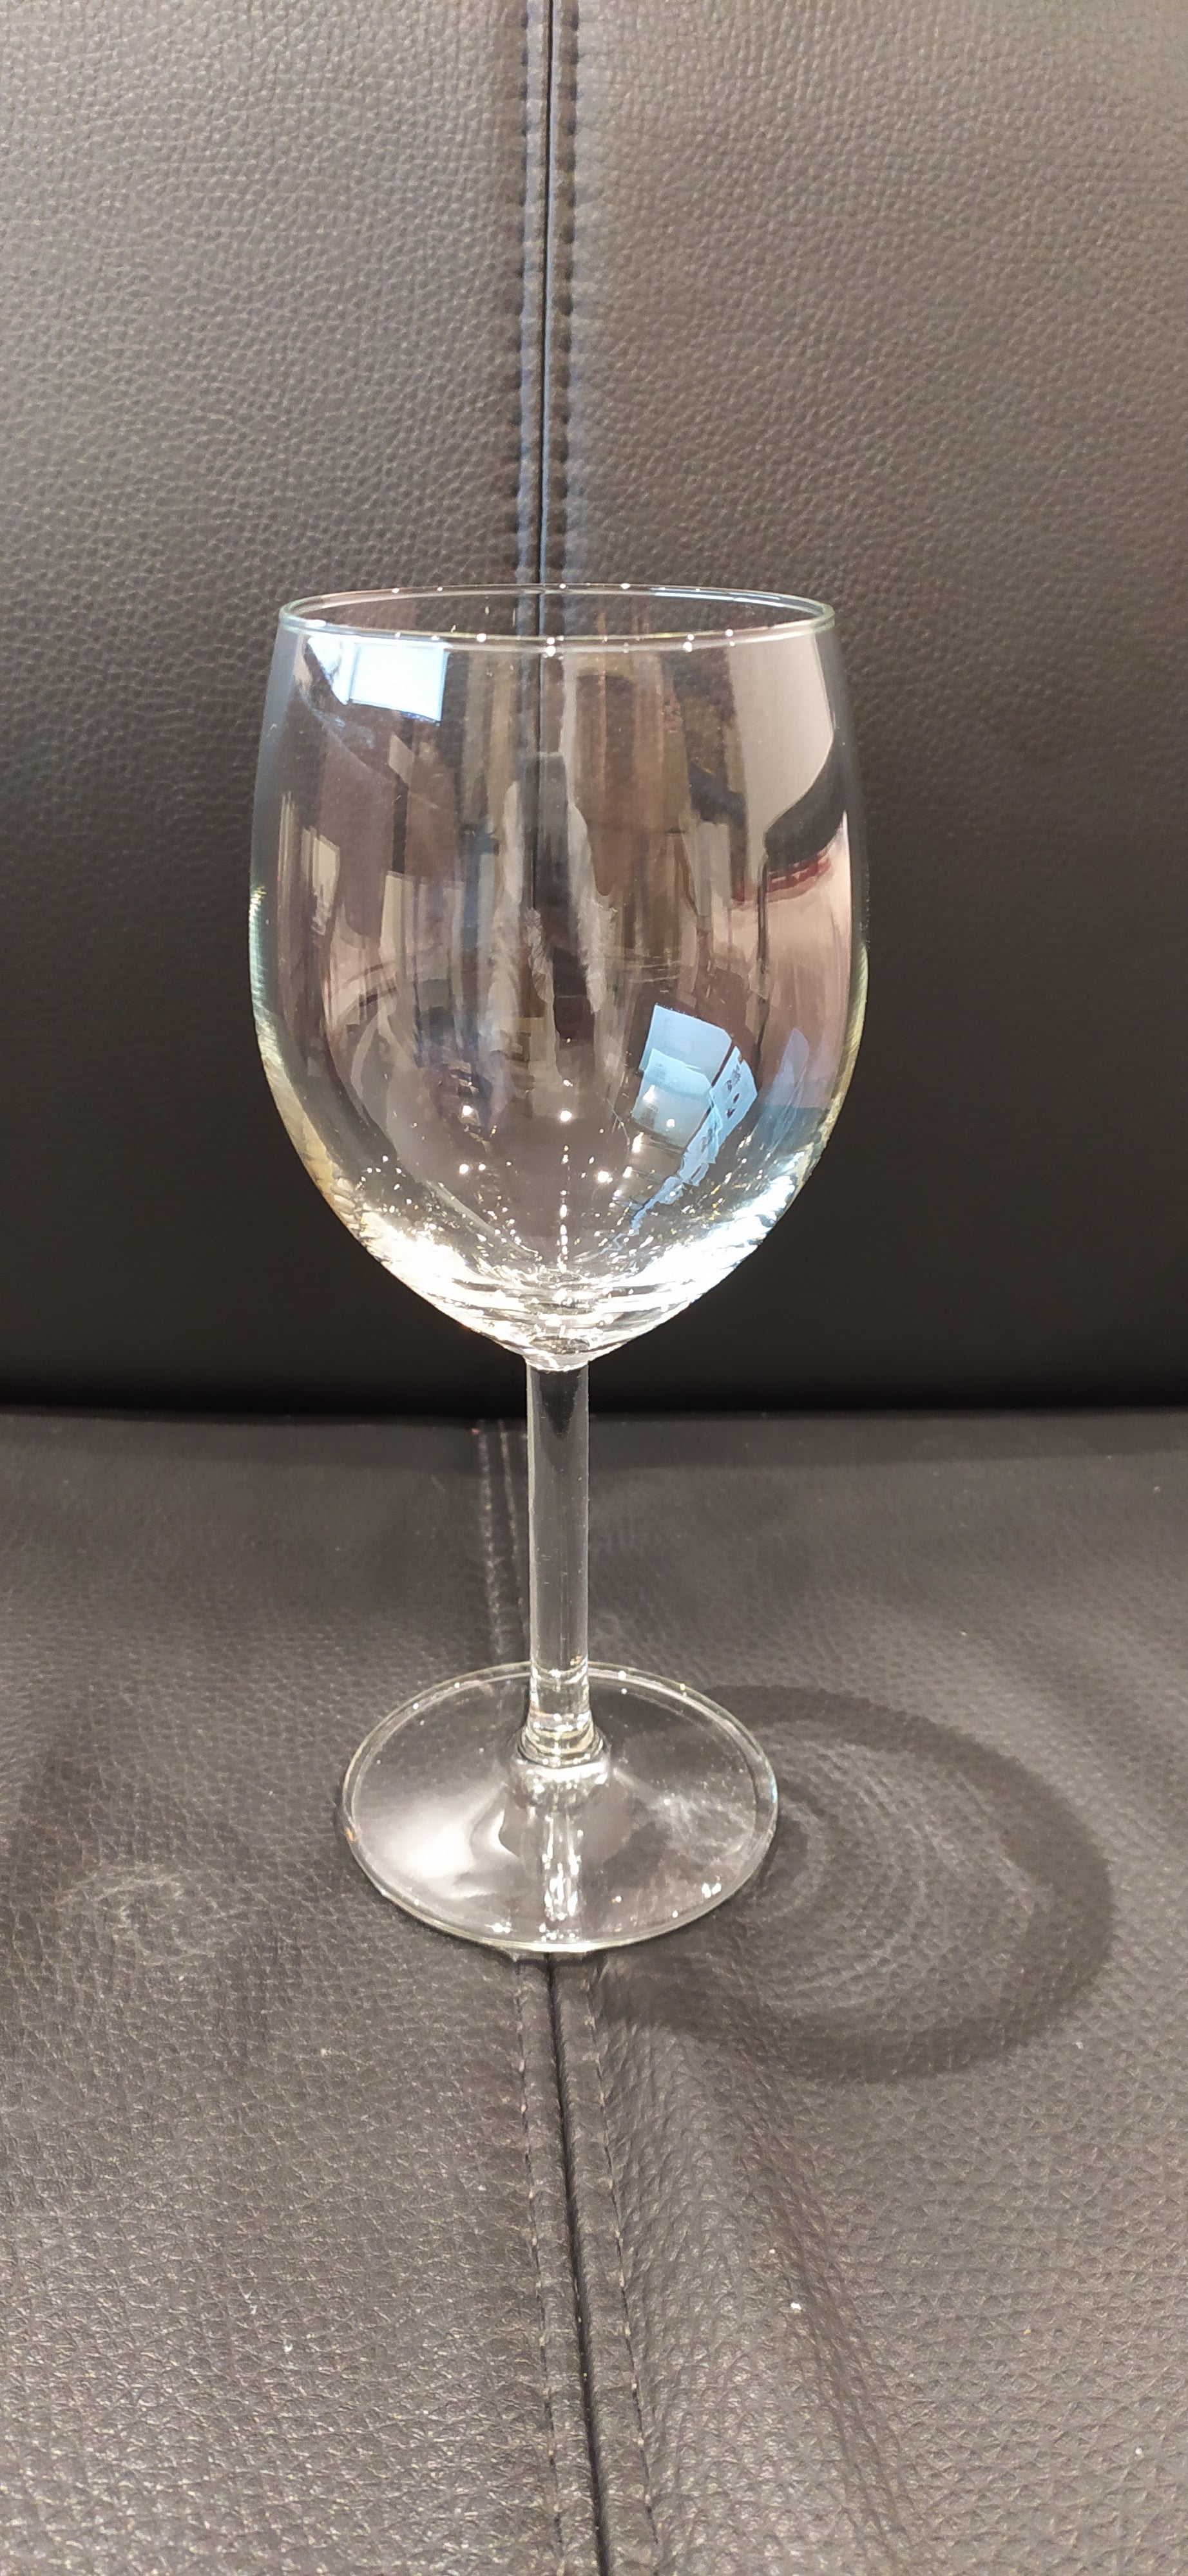 SVALKA Champagne flute - clear glass 7 oz